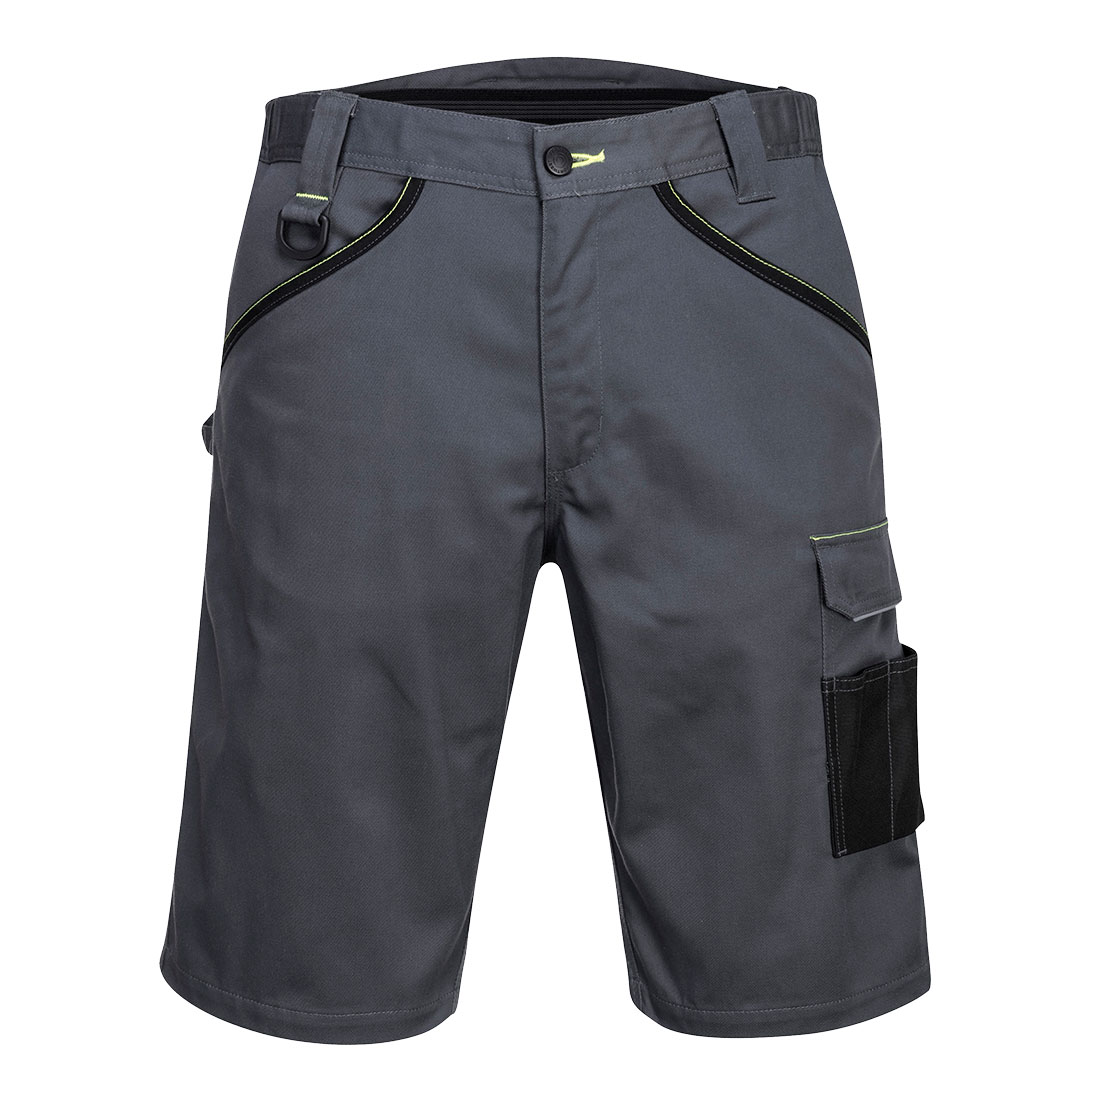 PW3 Work Shorts Velikost: 34, Barva: Zoom Grey/Black